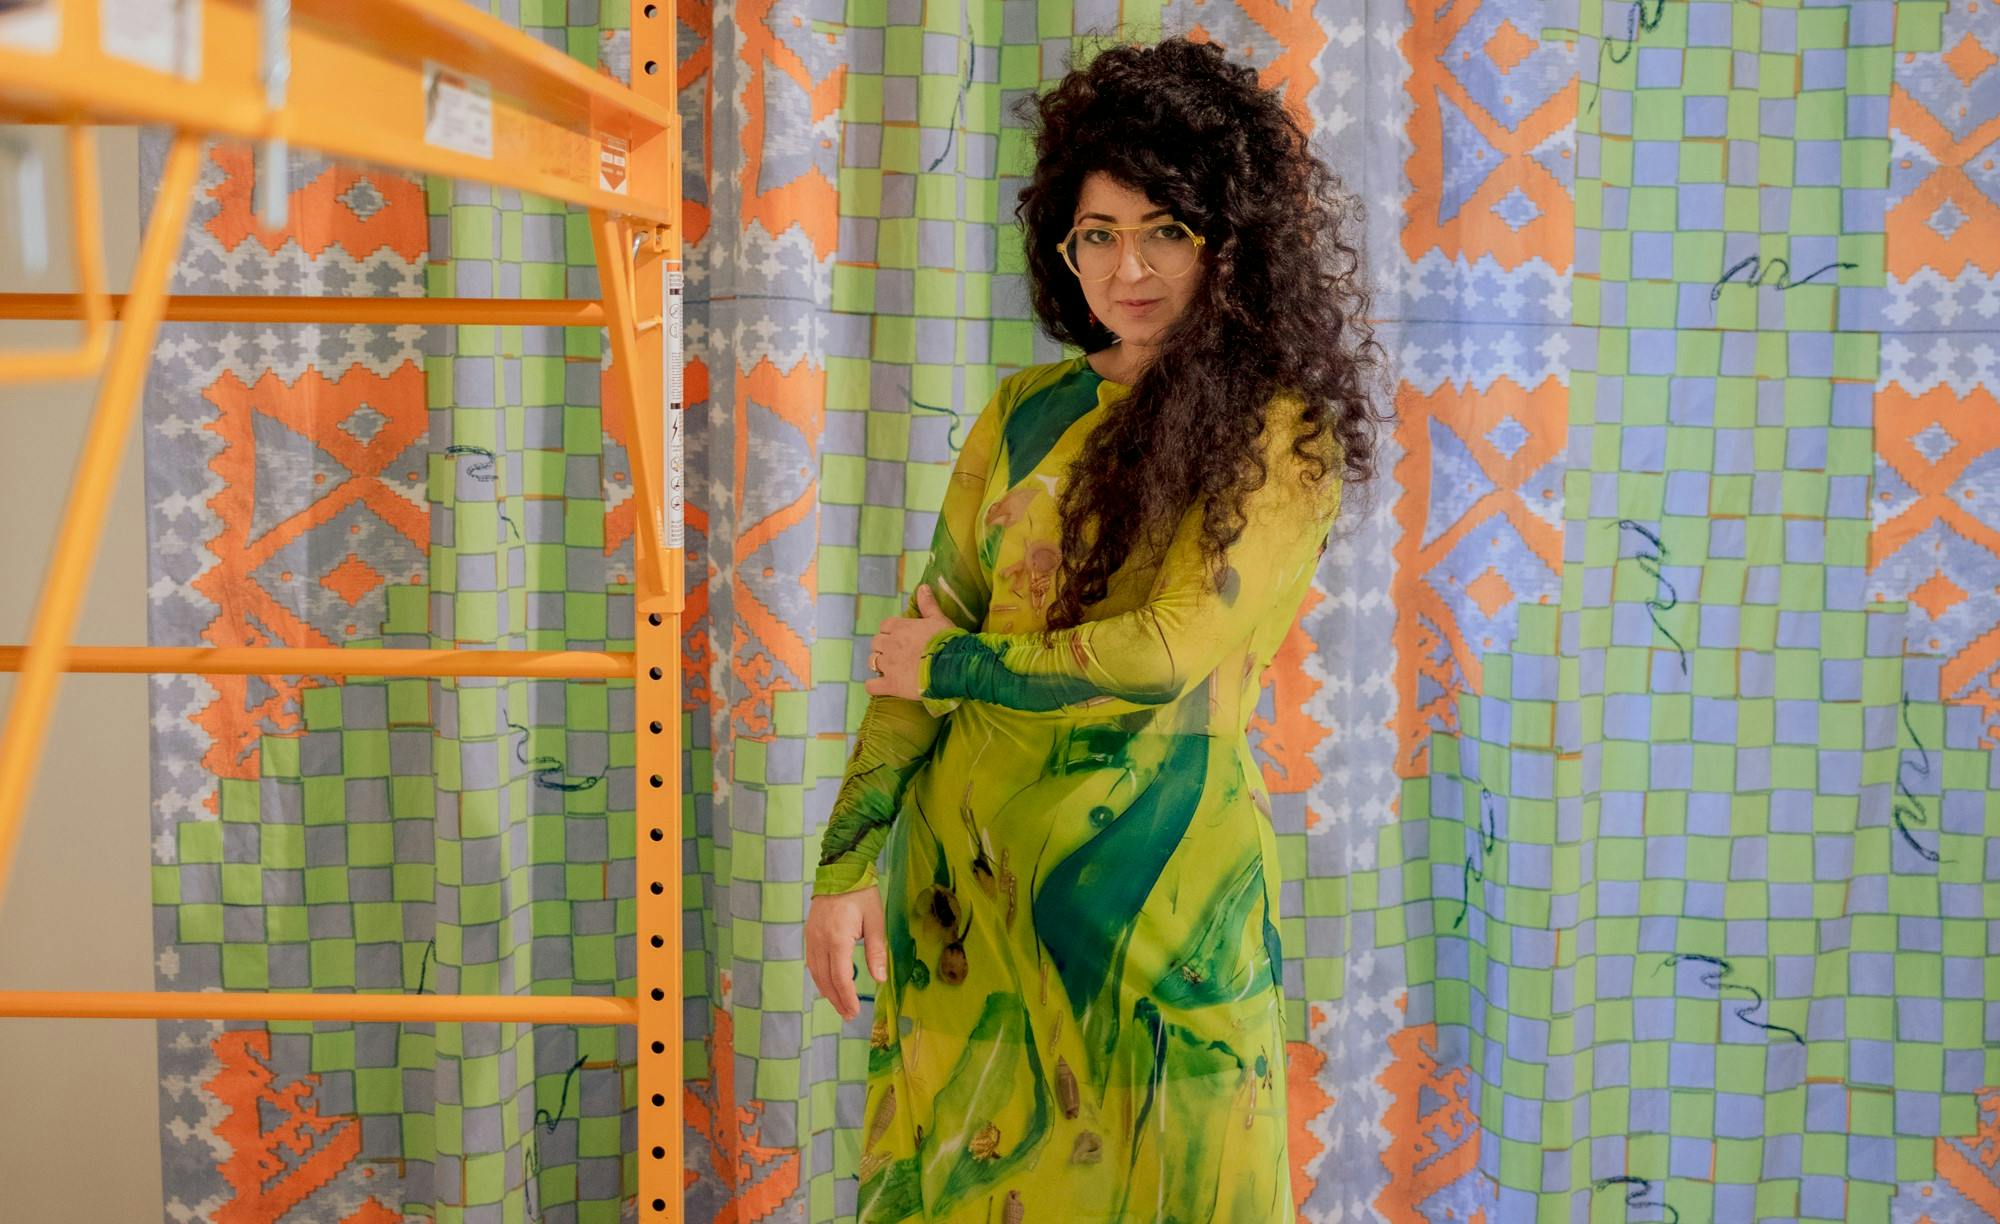 A portrait of Sheida Soleimani wearing a green dress during an exhibit installation.